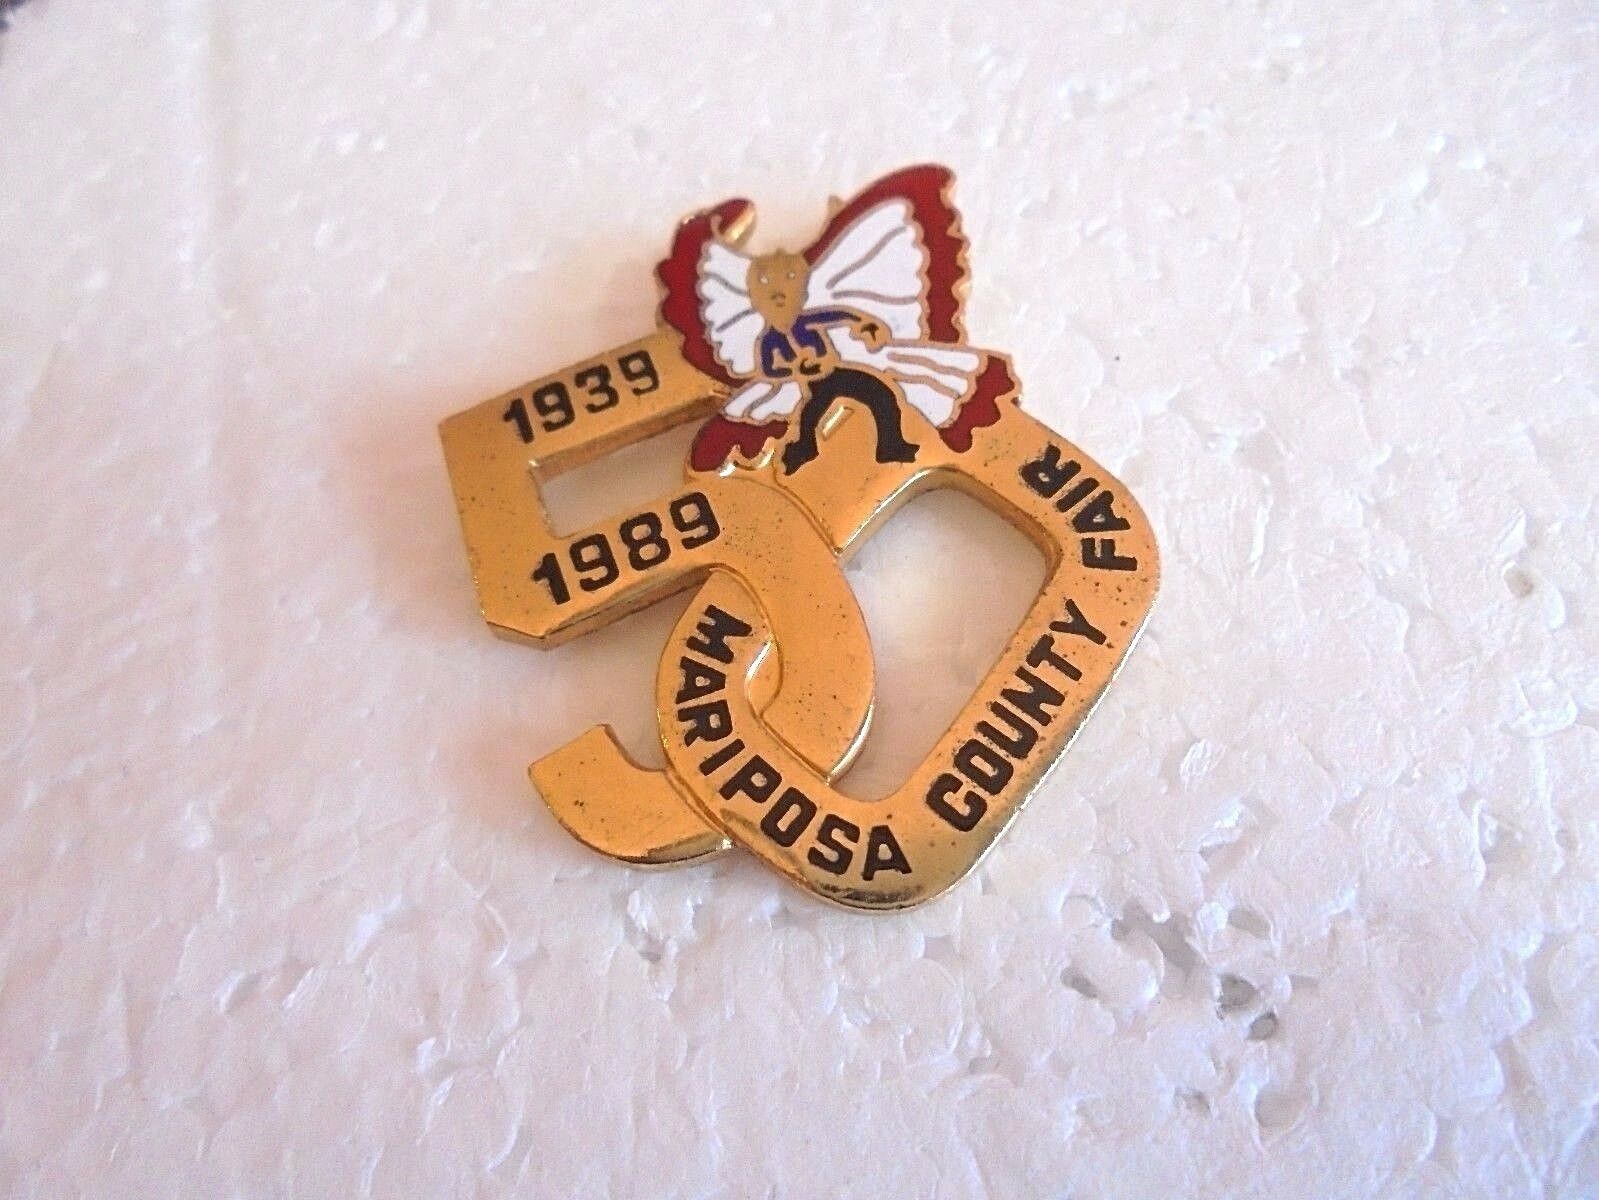 Vintage Mariposa County California 1939-1989 50 Years Souvenir Enamel Lapel Pin